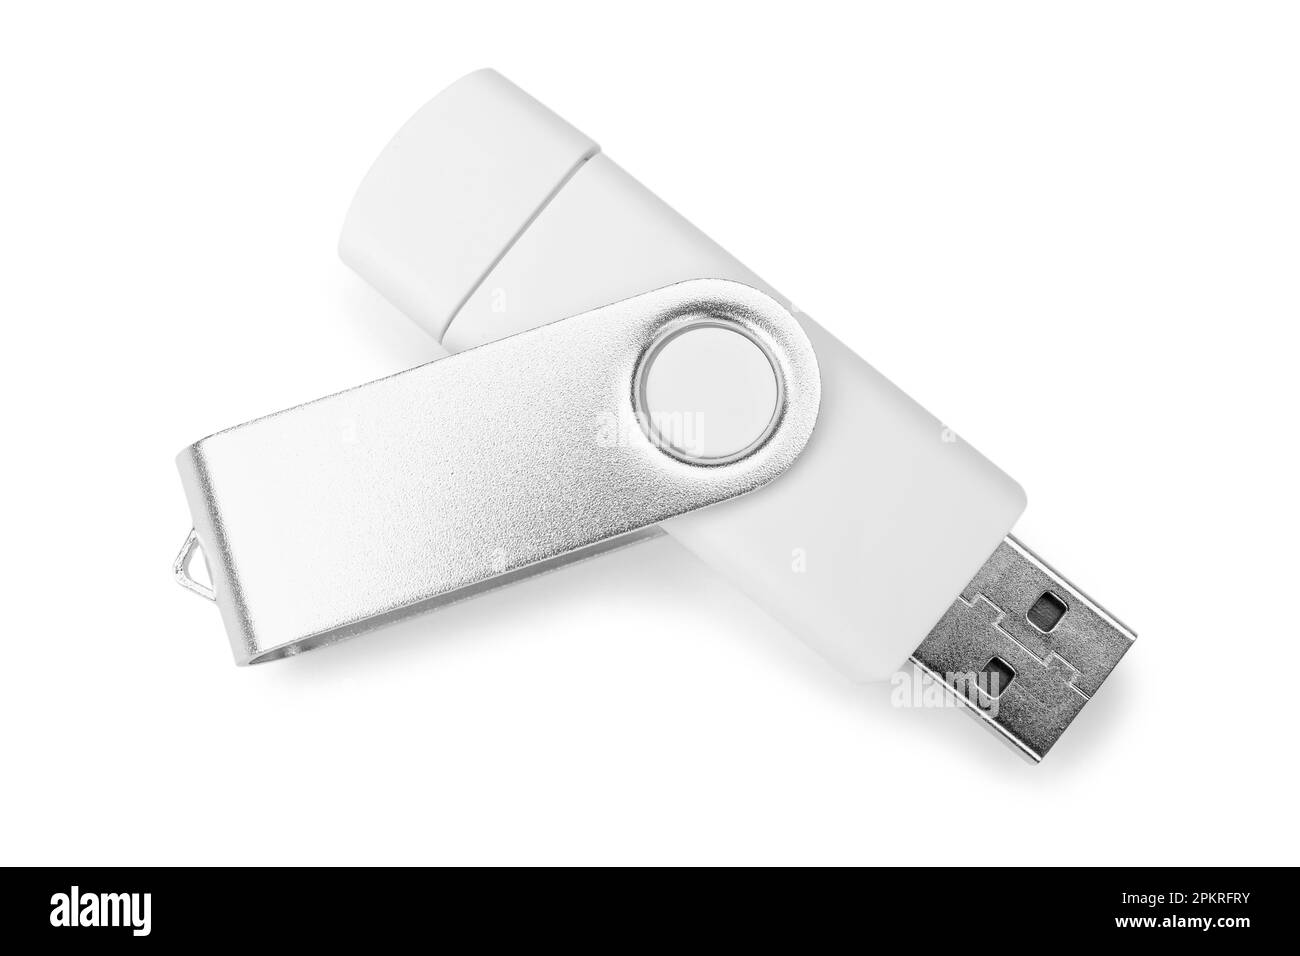 USB flash drive isolated on white background Stock Photo